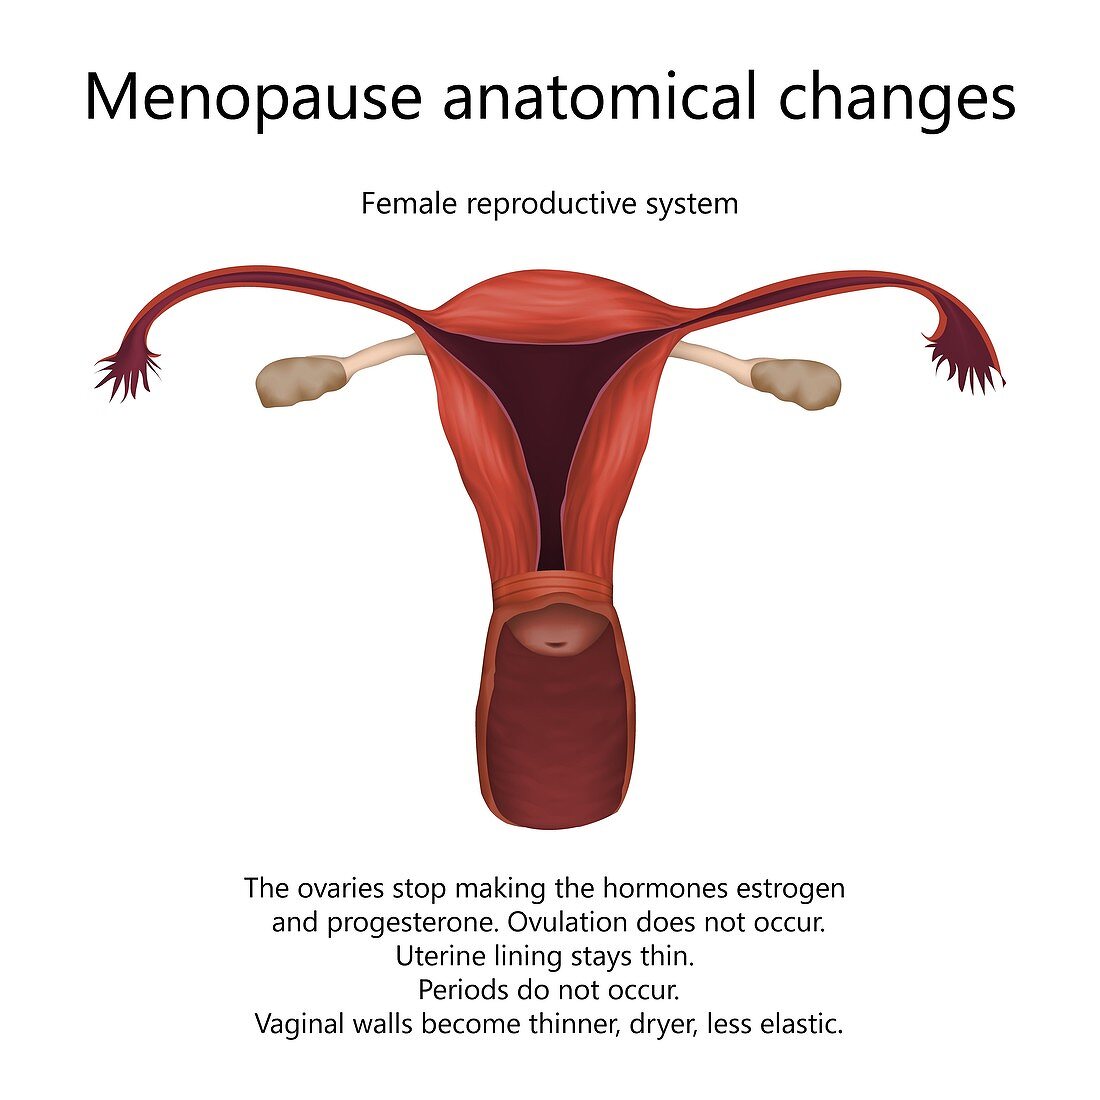 Menopause anatomical changes, illustration